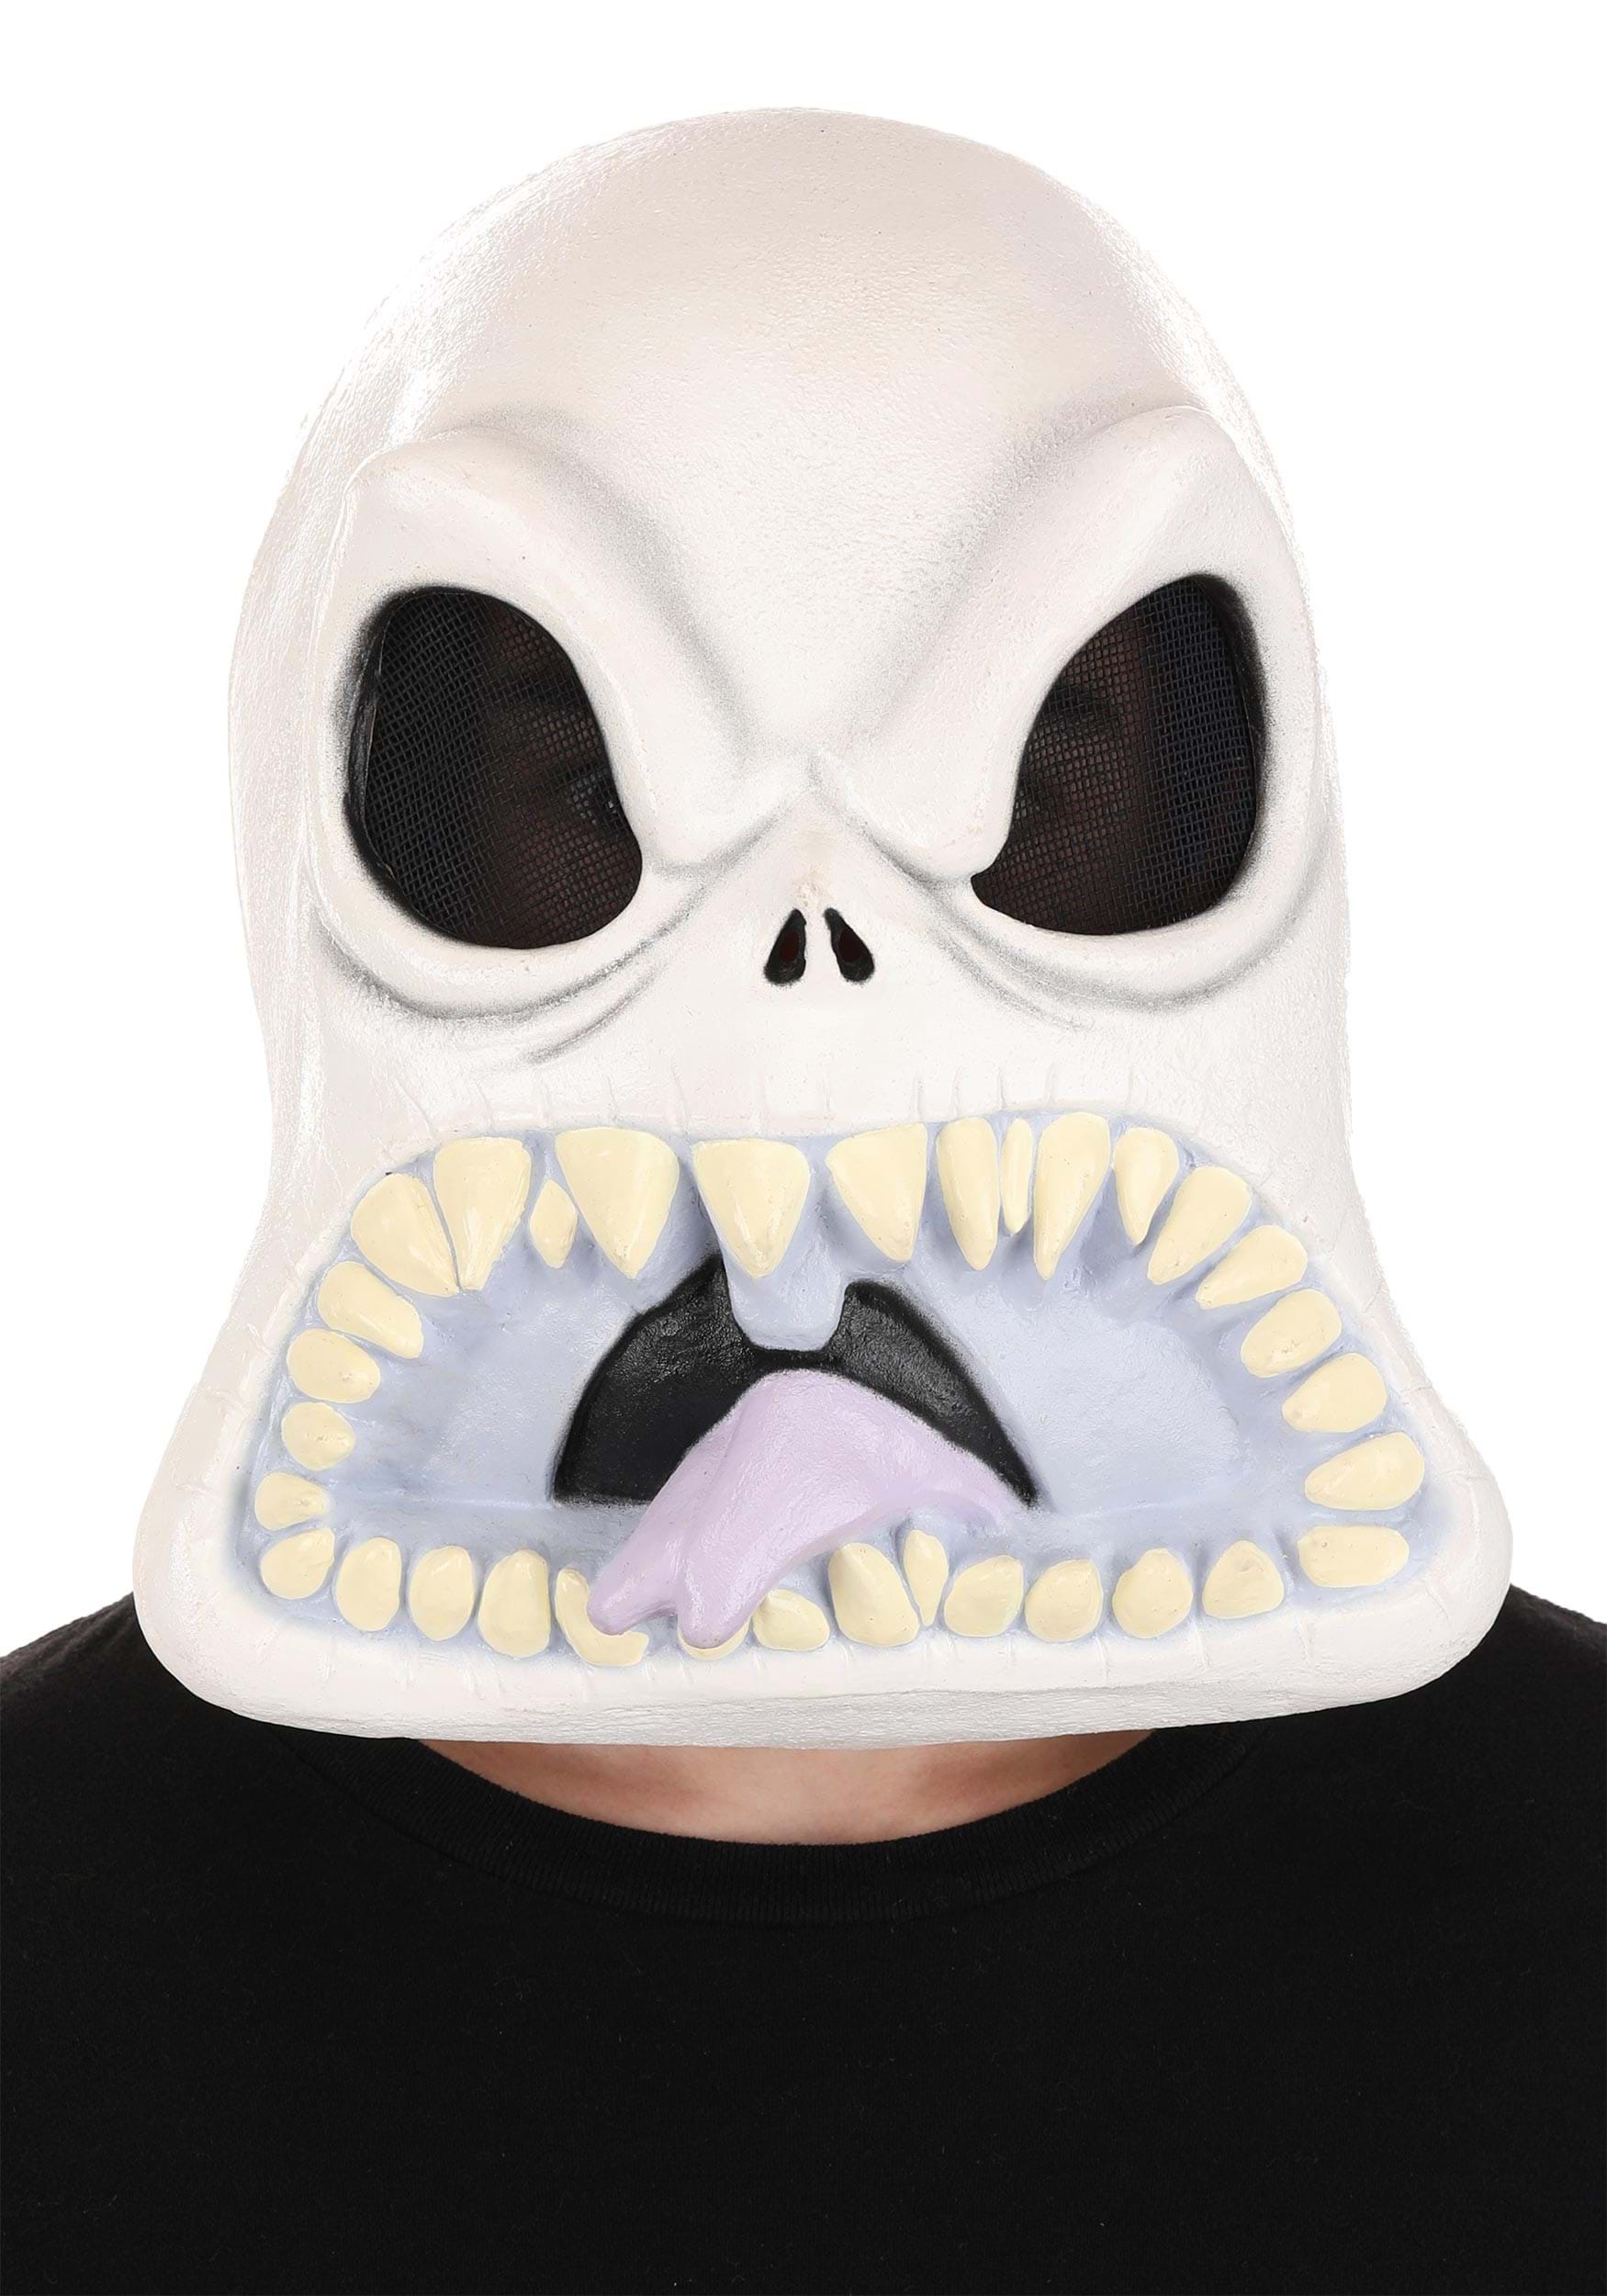 Image of Disney Scary Jack Skellington Deluxe Latex Mask | Disney Masks ID EL453516-ST